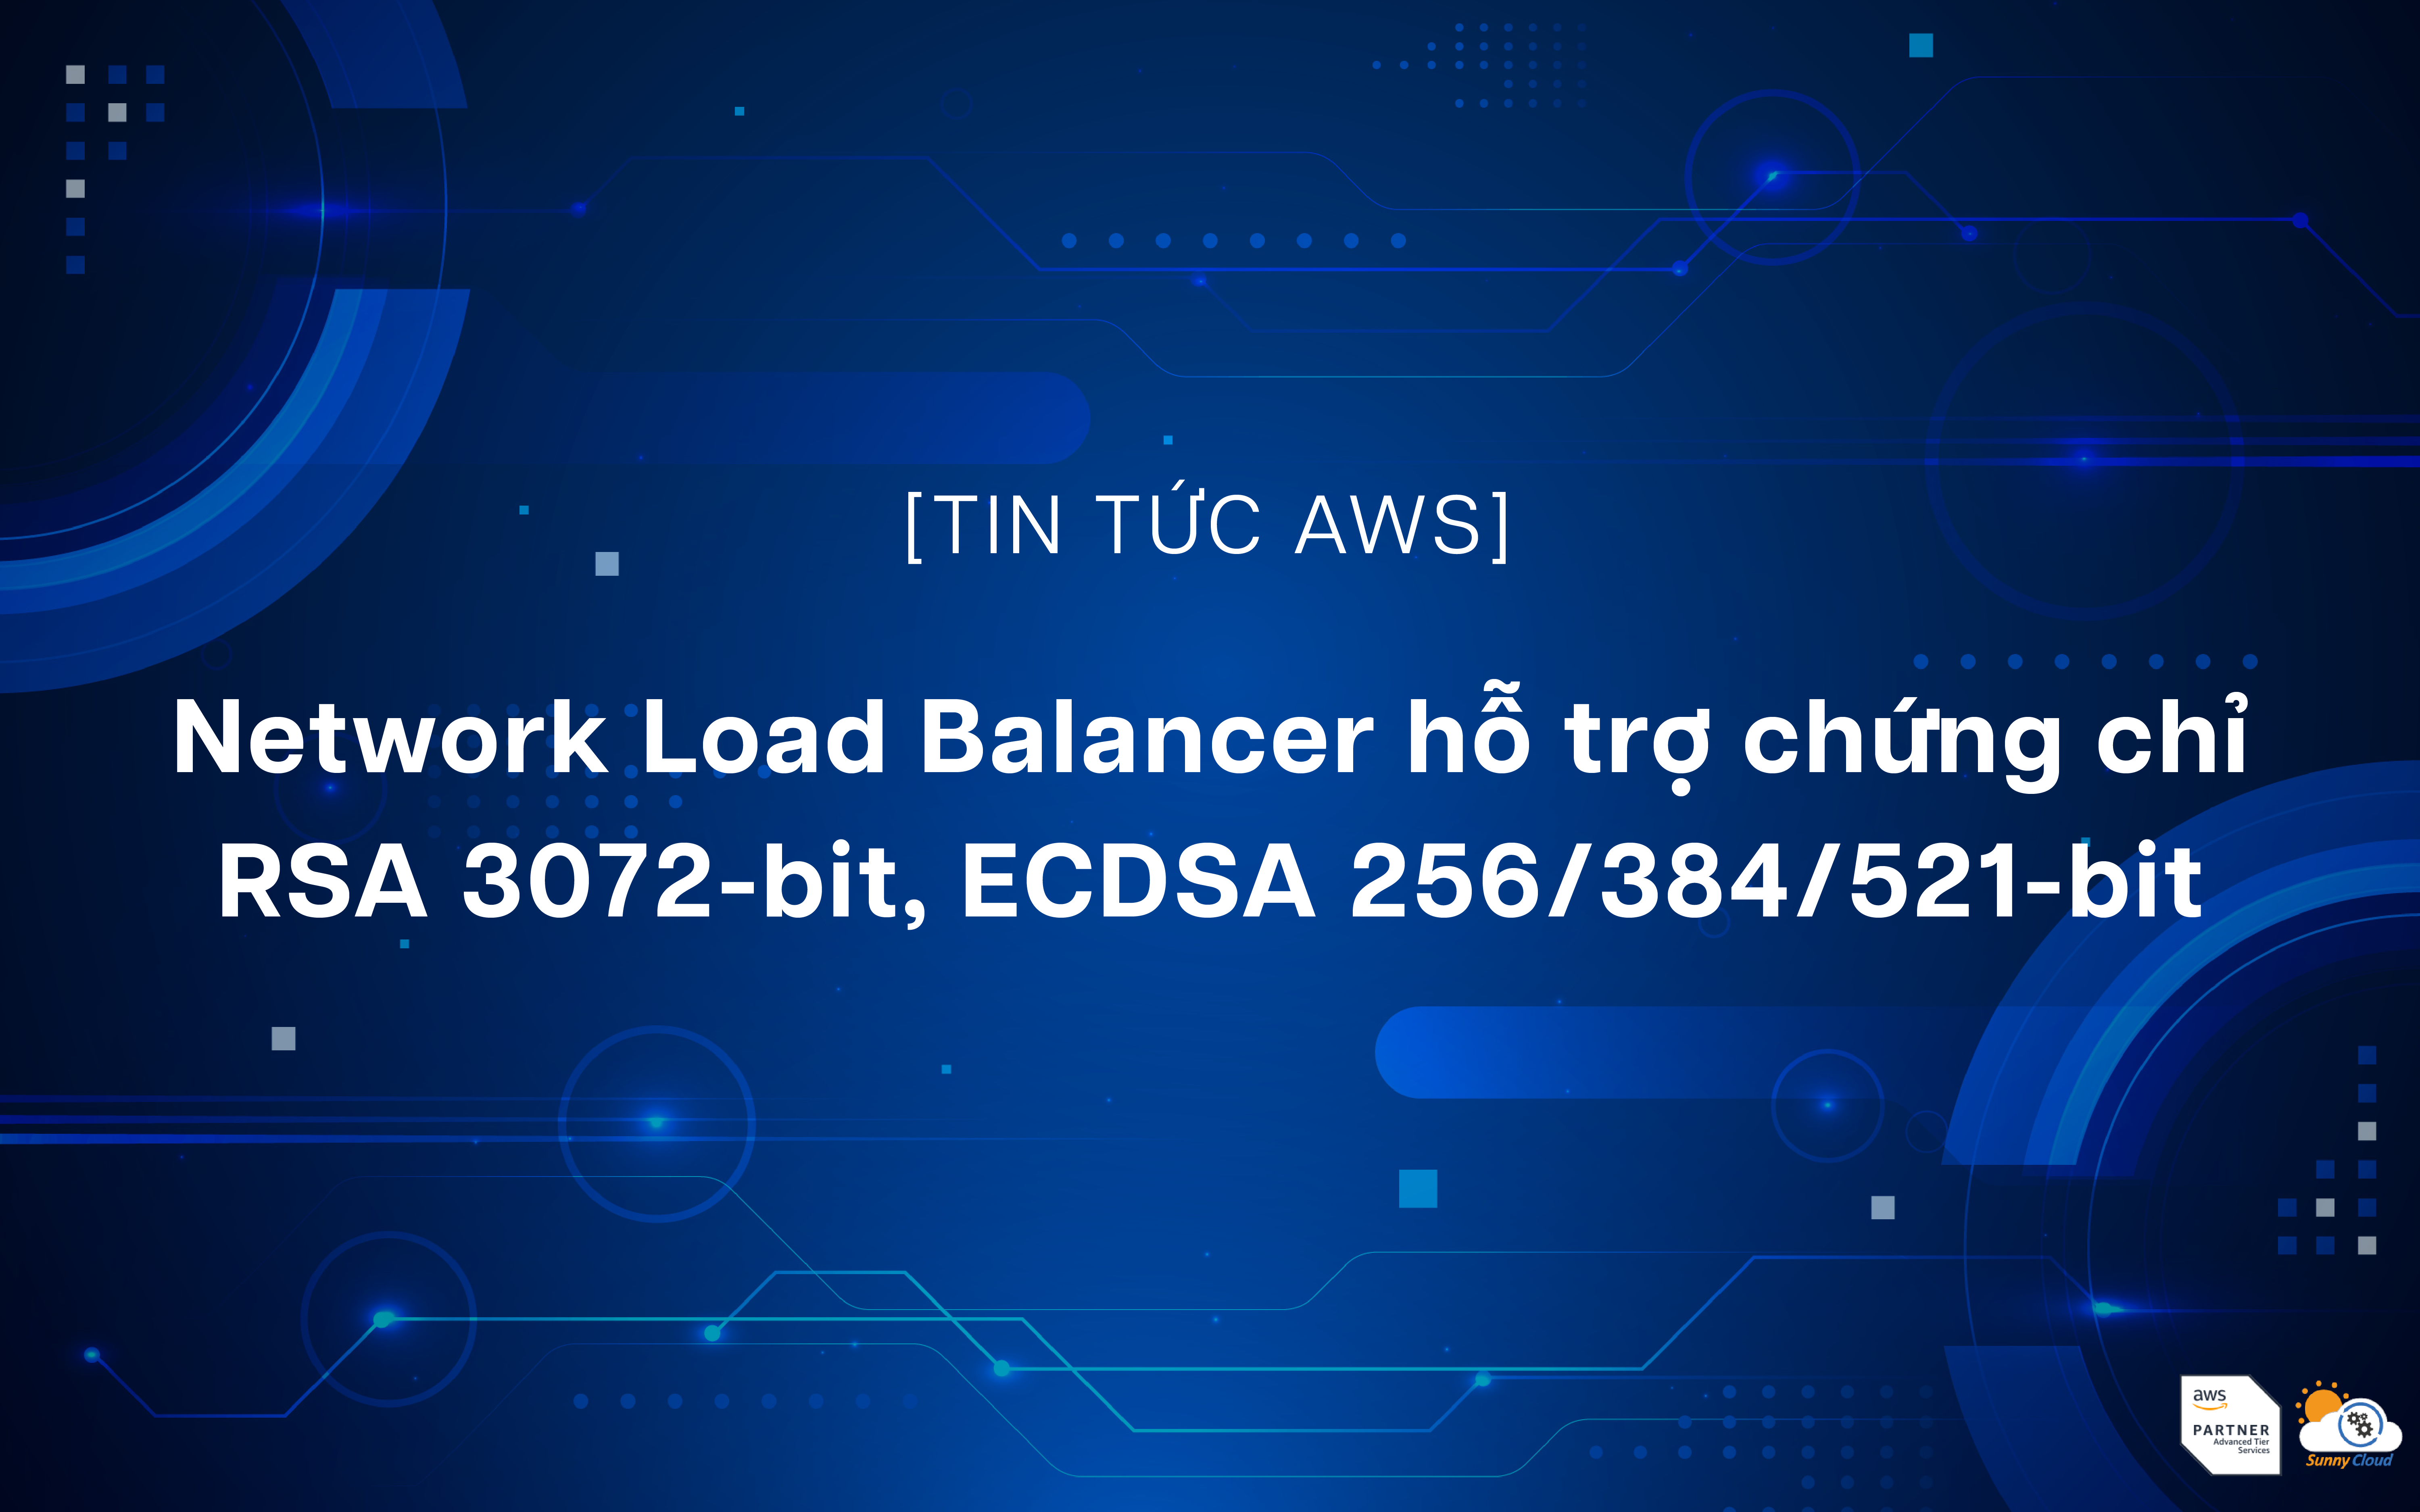 Network Load Balancer ho tro chung chi RSA 3072-bit, ECDSA 256/384/521-bit